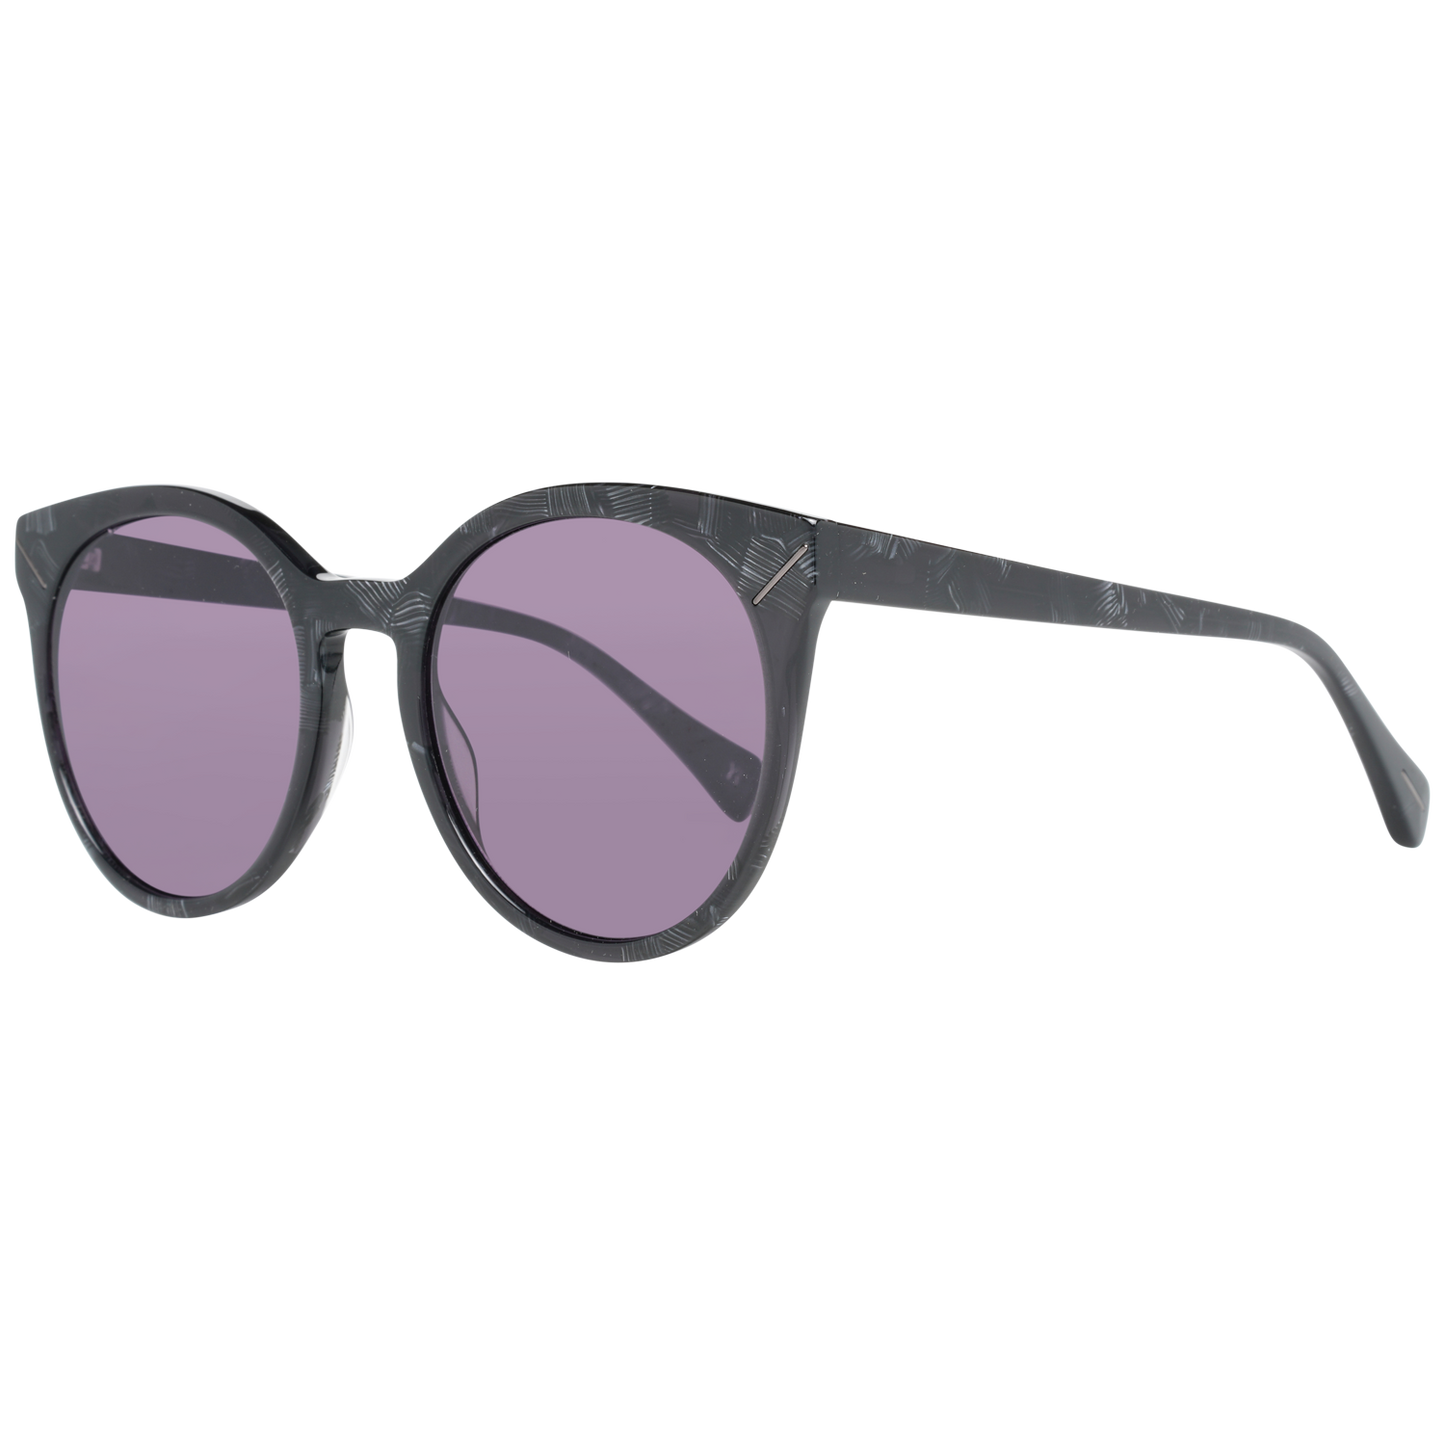 Yohji Yamamoto Sunglasses YS5003 024 54 Women